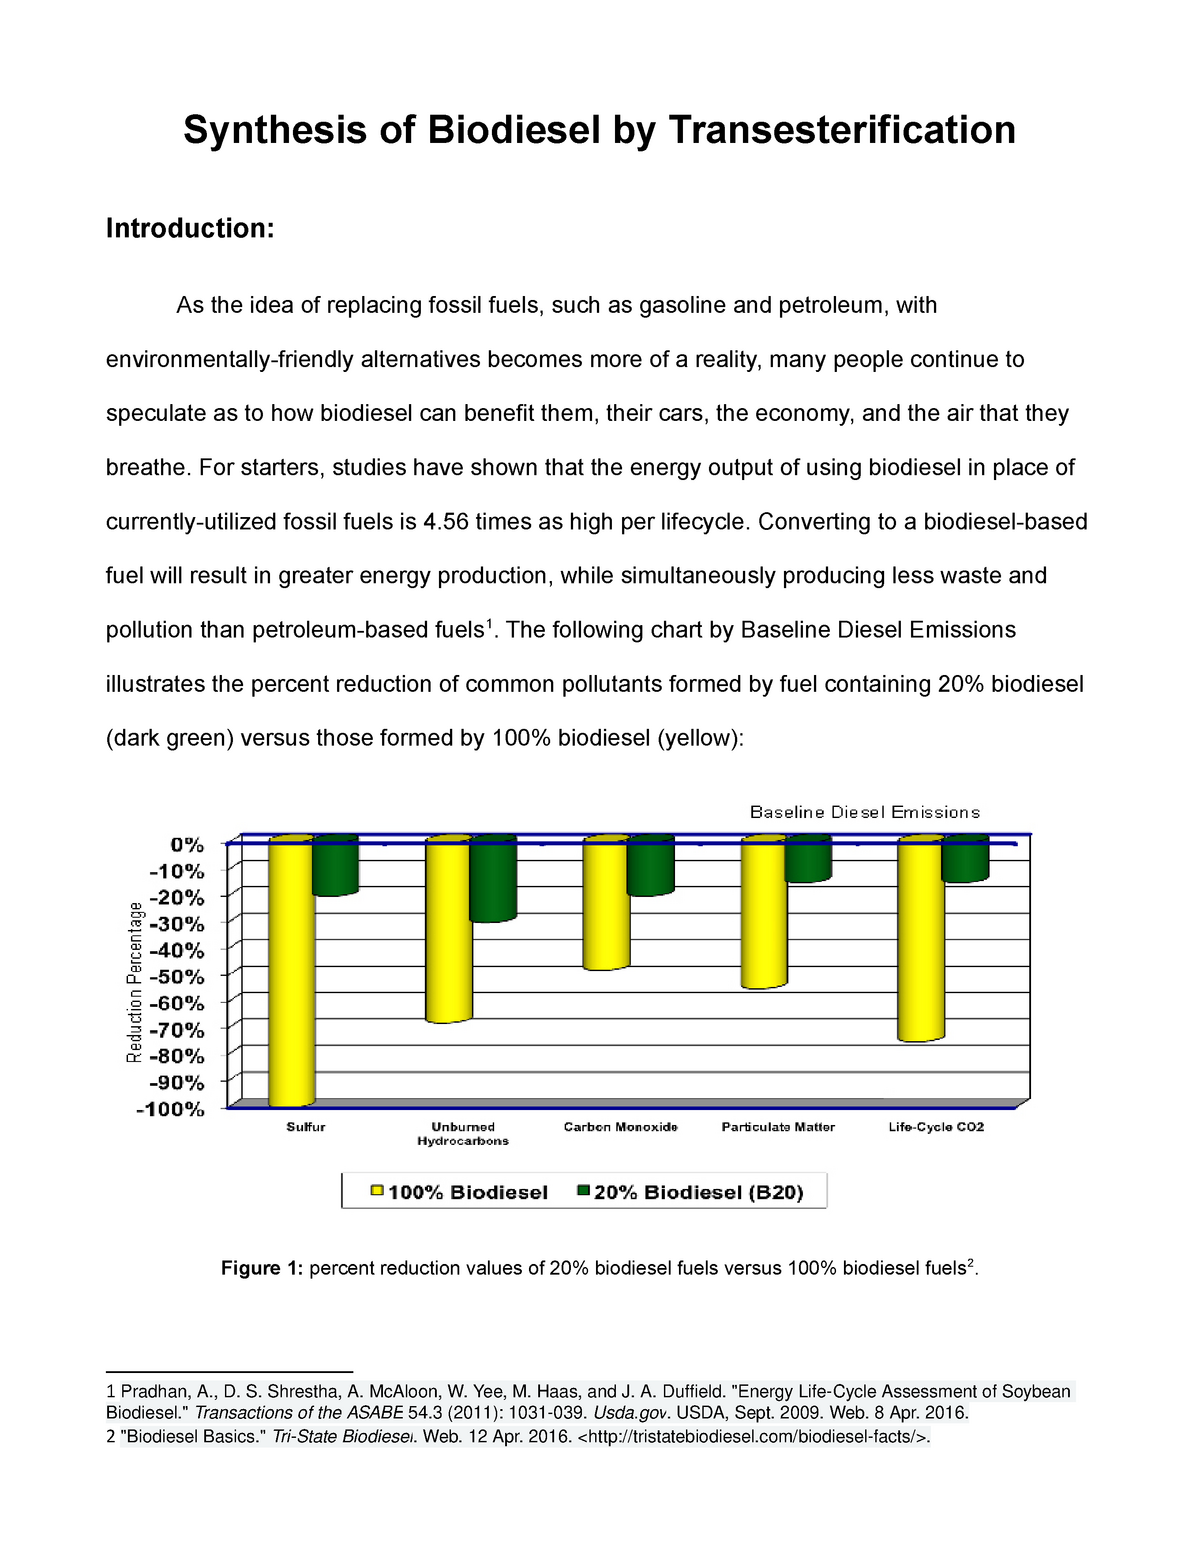 Biodiesel Titration Chart